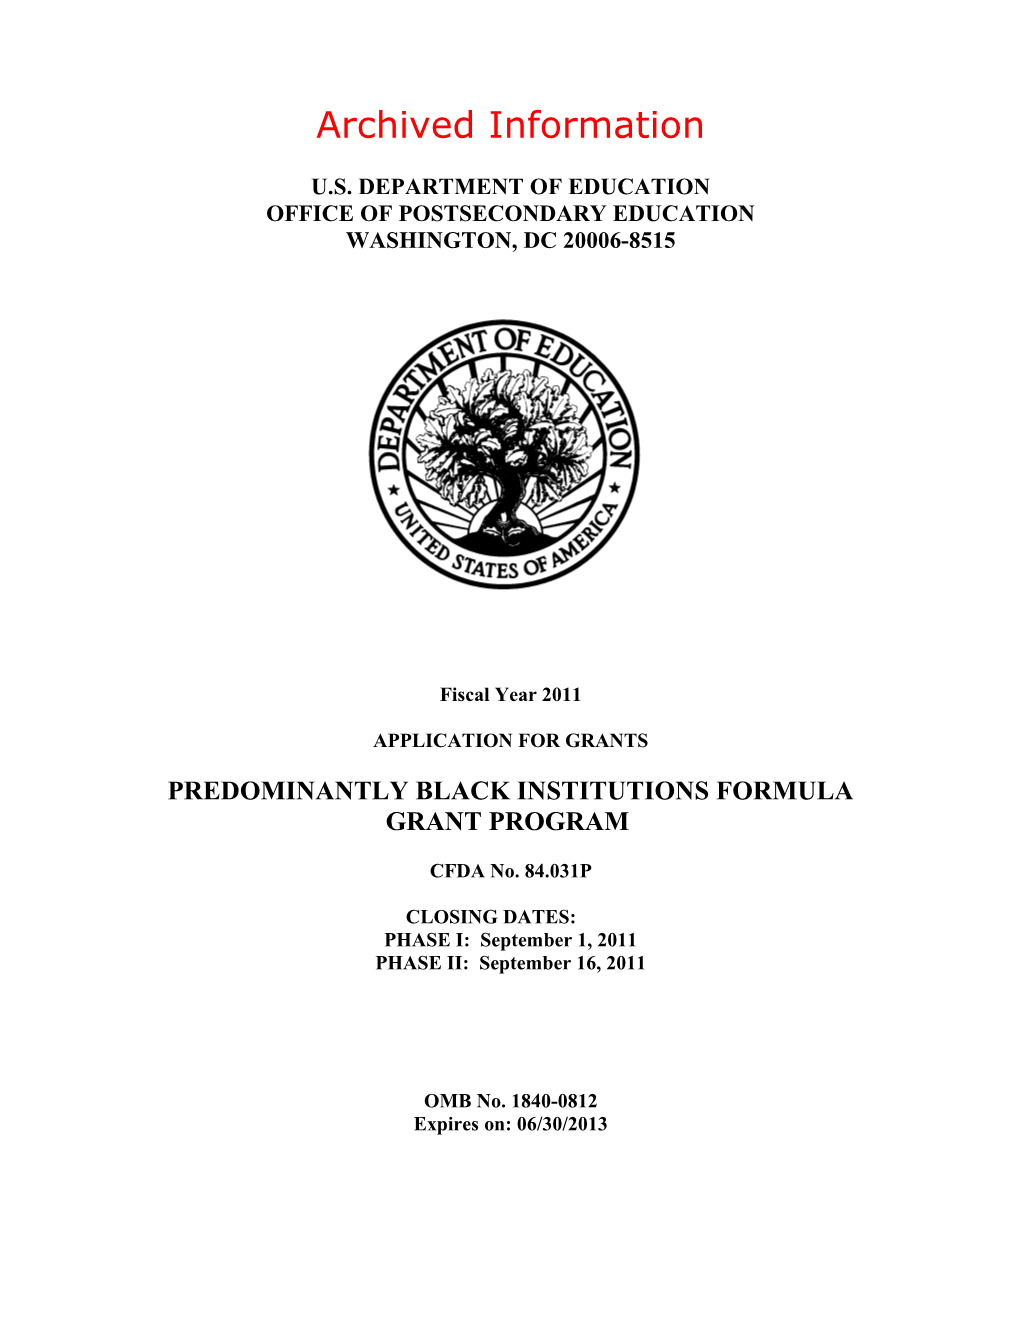 Archived: FY 2011 Grant Application - Predominantly Black Institutions Formula Grant Program